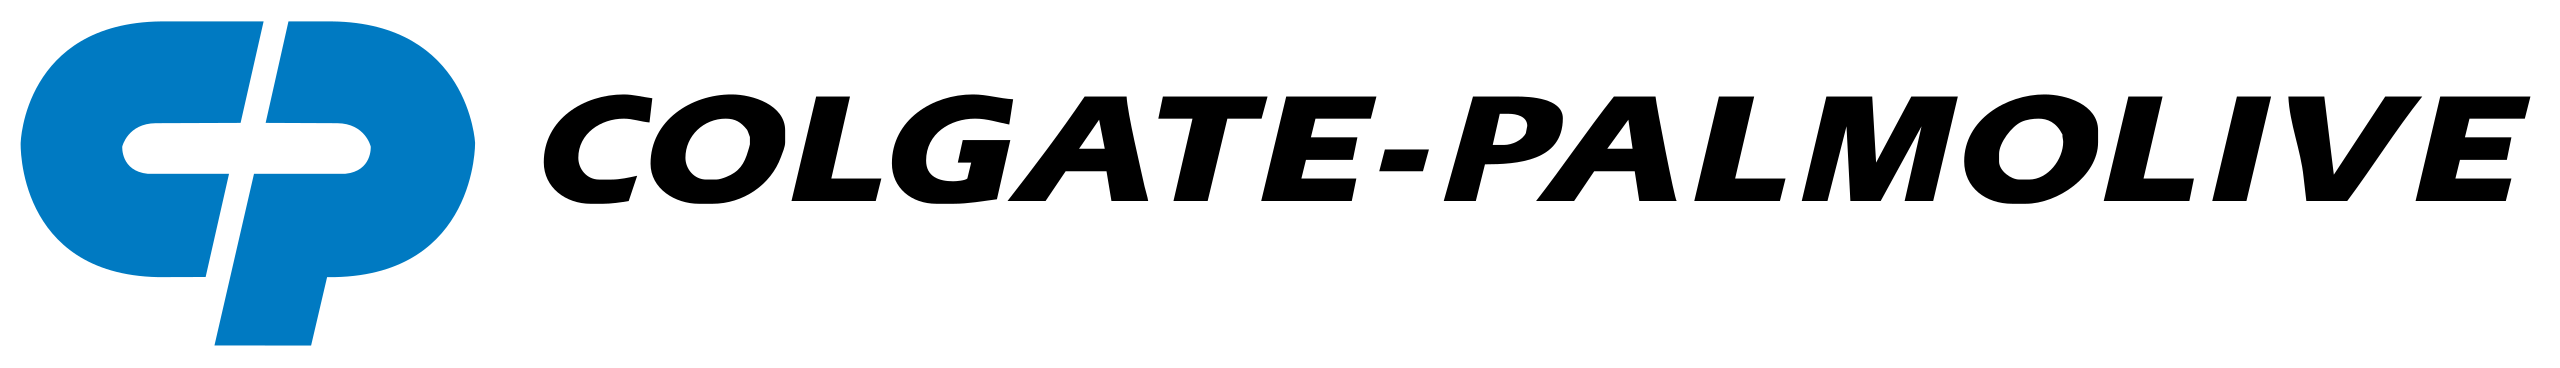 Logotipo de Colgate‑Palmolive